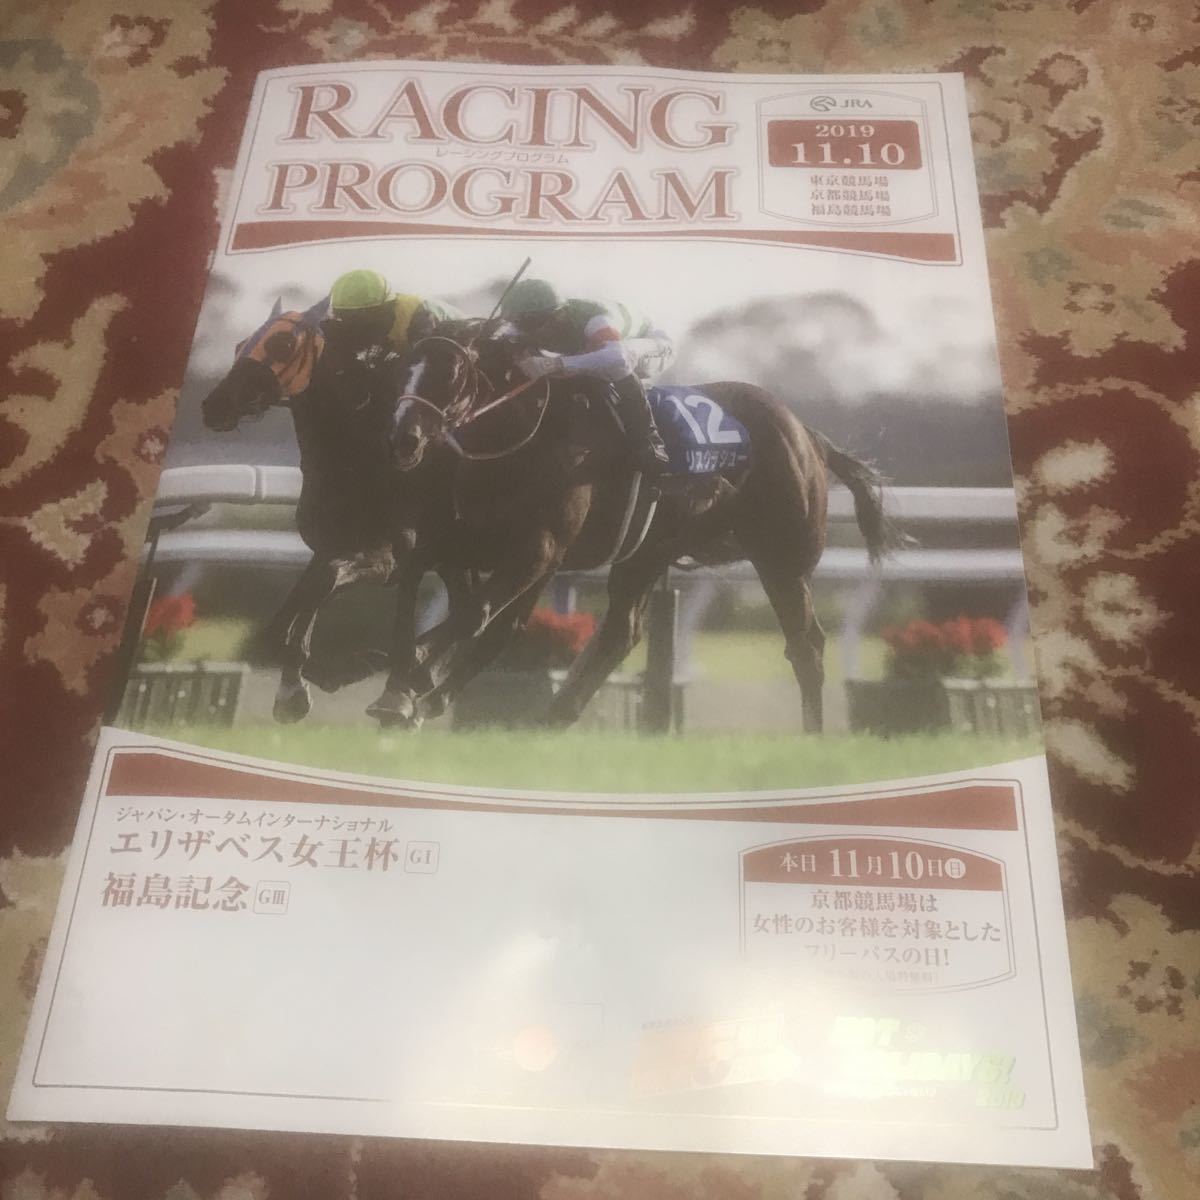 JRA Racing Program 2019.11.10( day ) Elizabeth woman . cup (GⅠ), Fukushima memory (GⅢ)